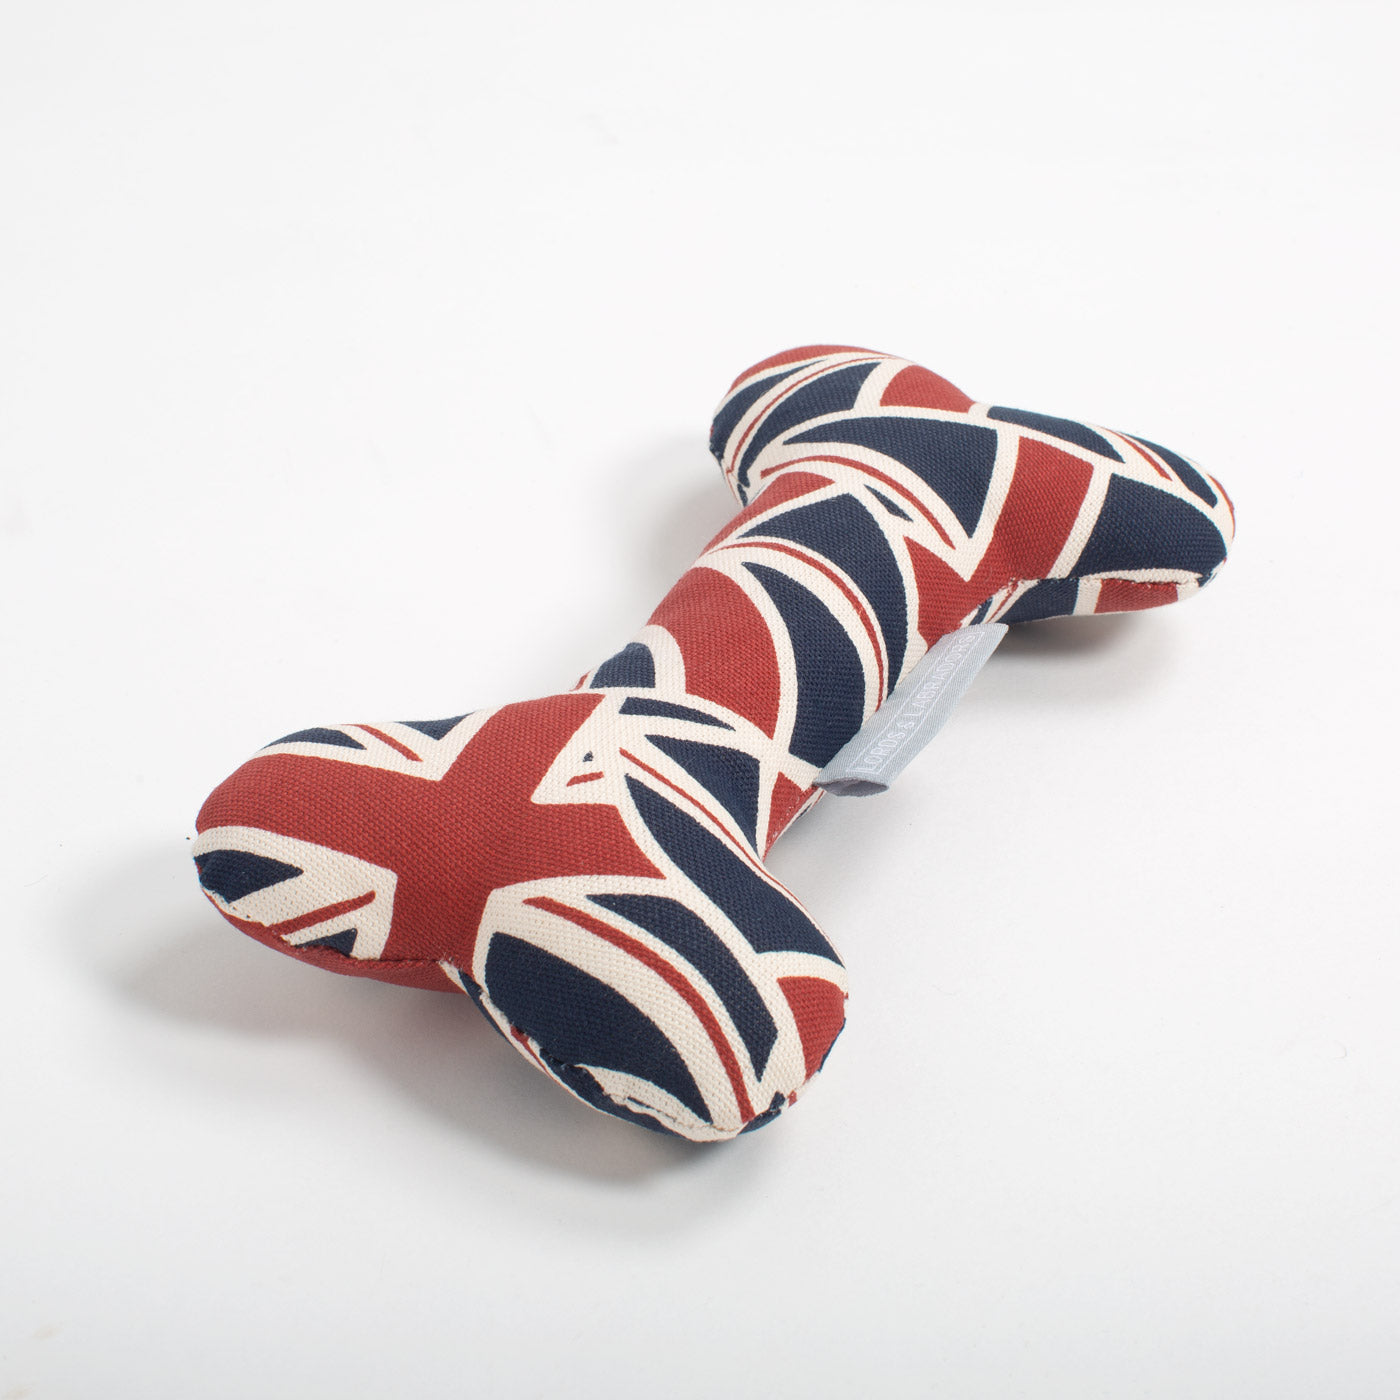 Union Jack Dog Bone Toy by Lords & Labradors